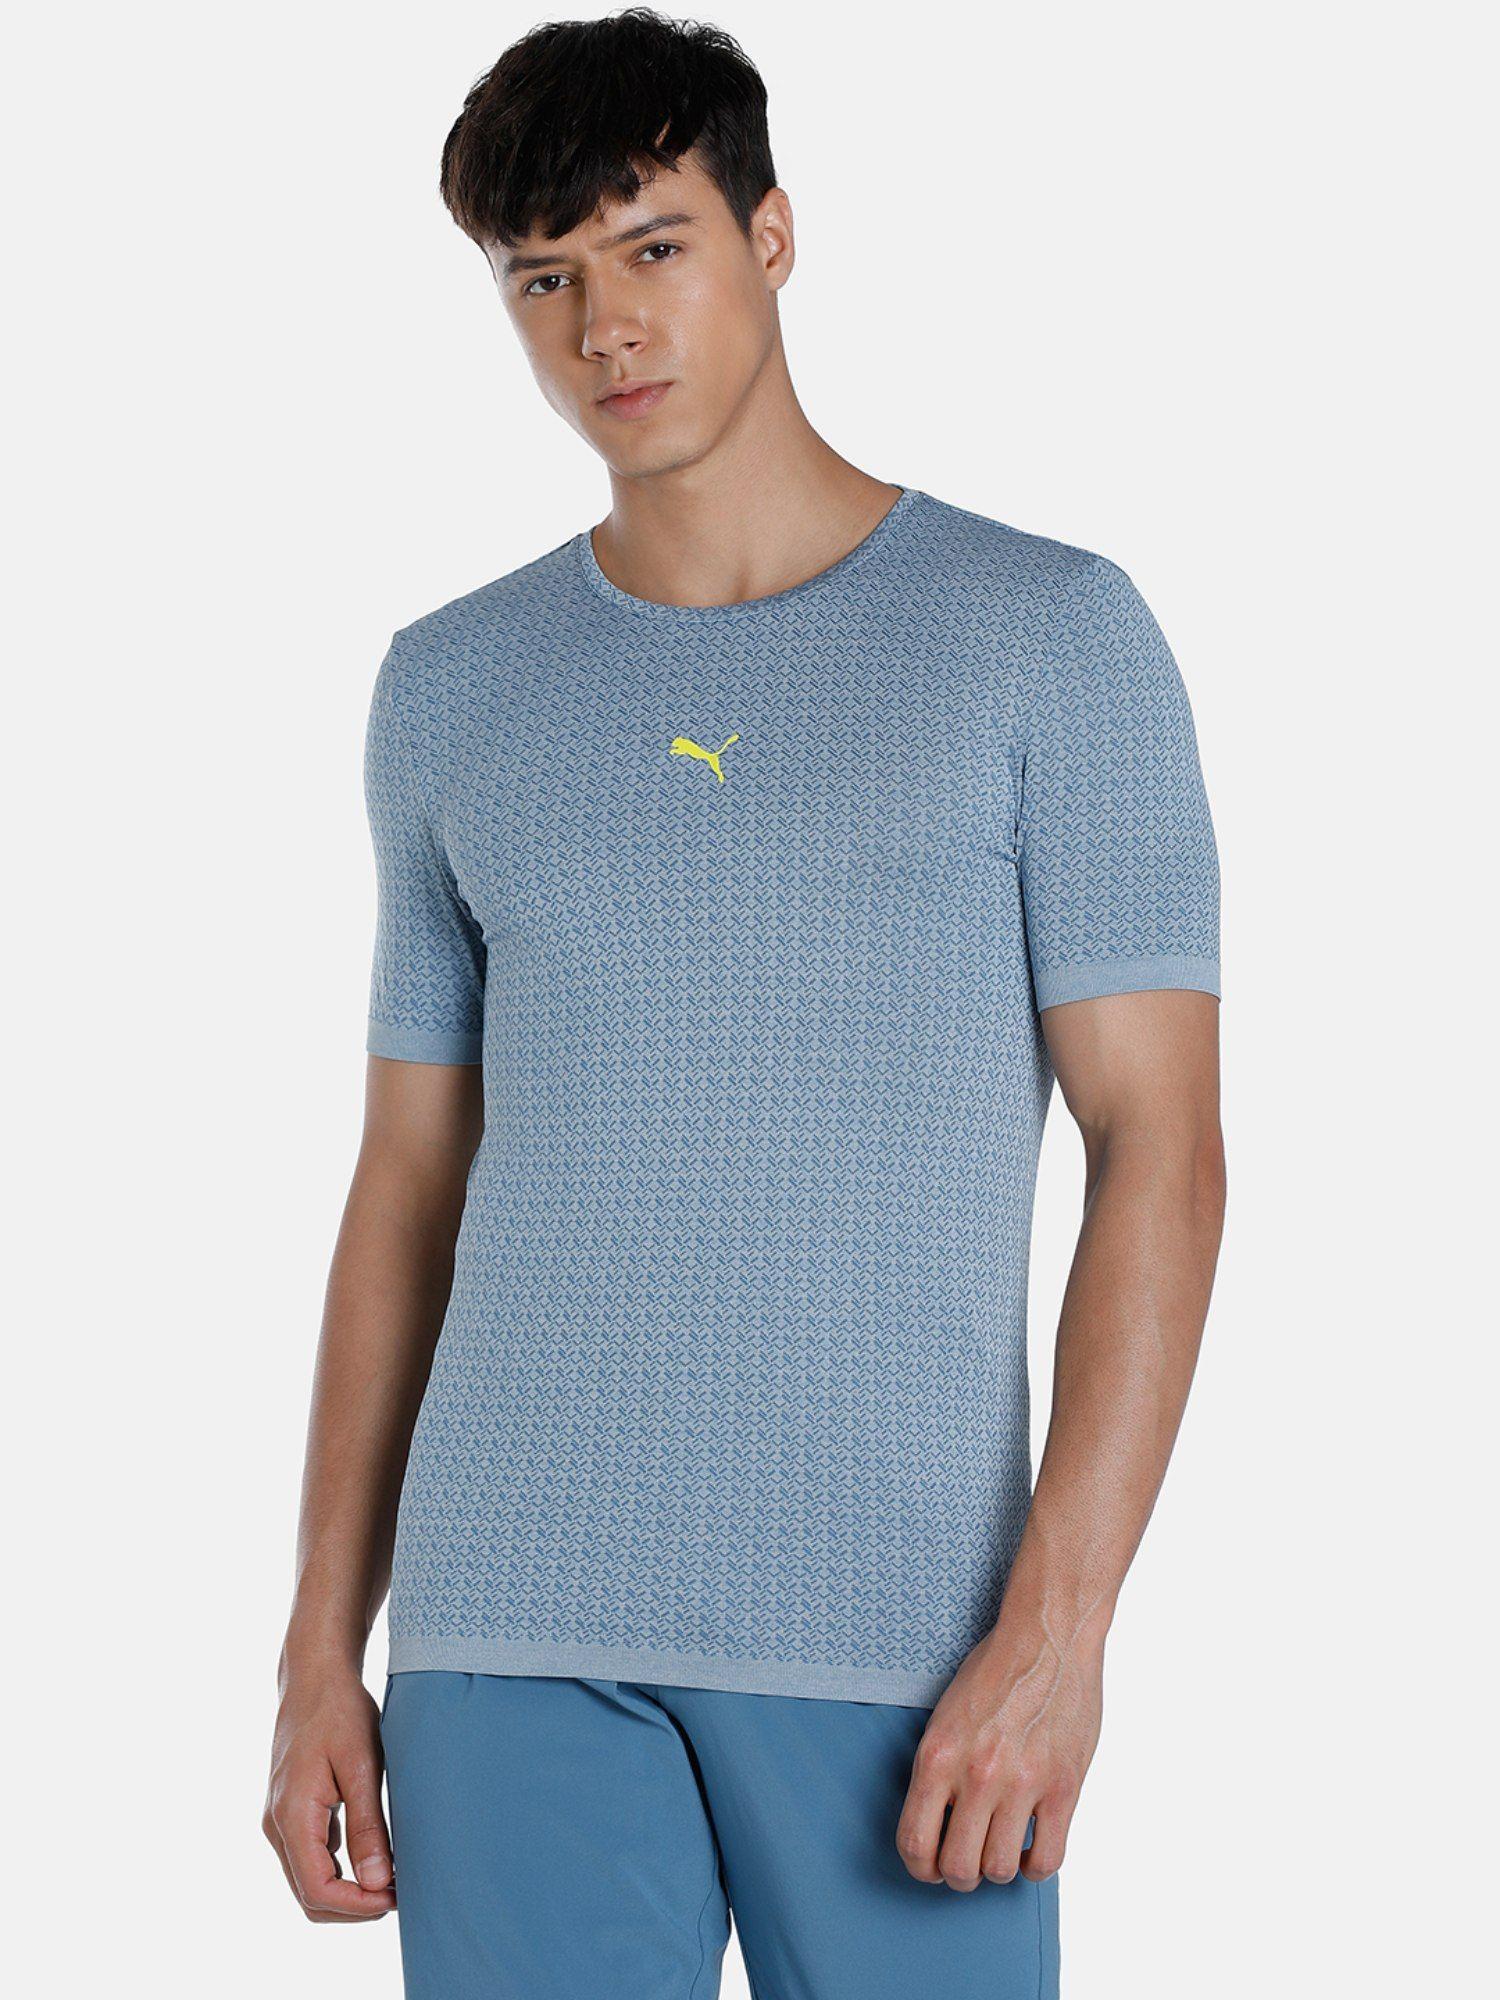 xone8 seamless men blue t-shirt